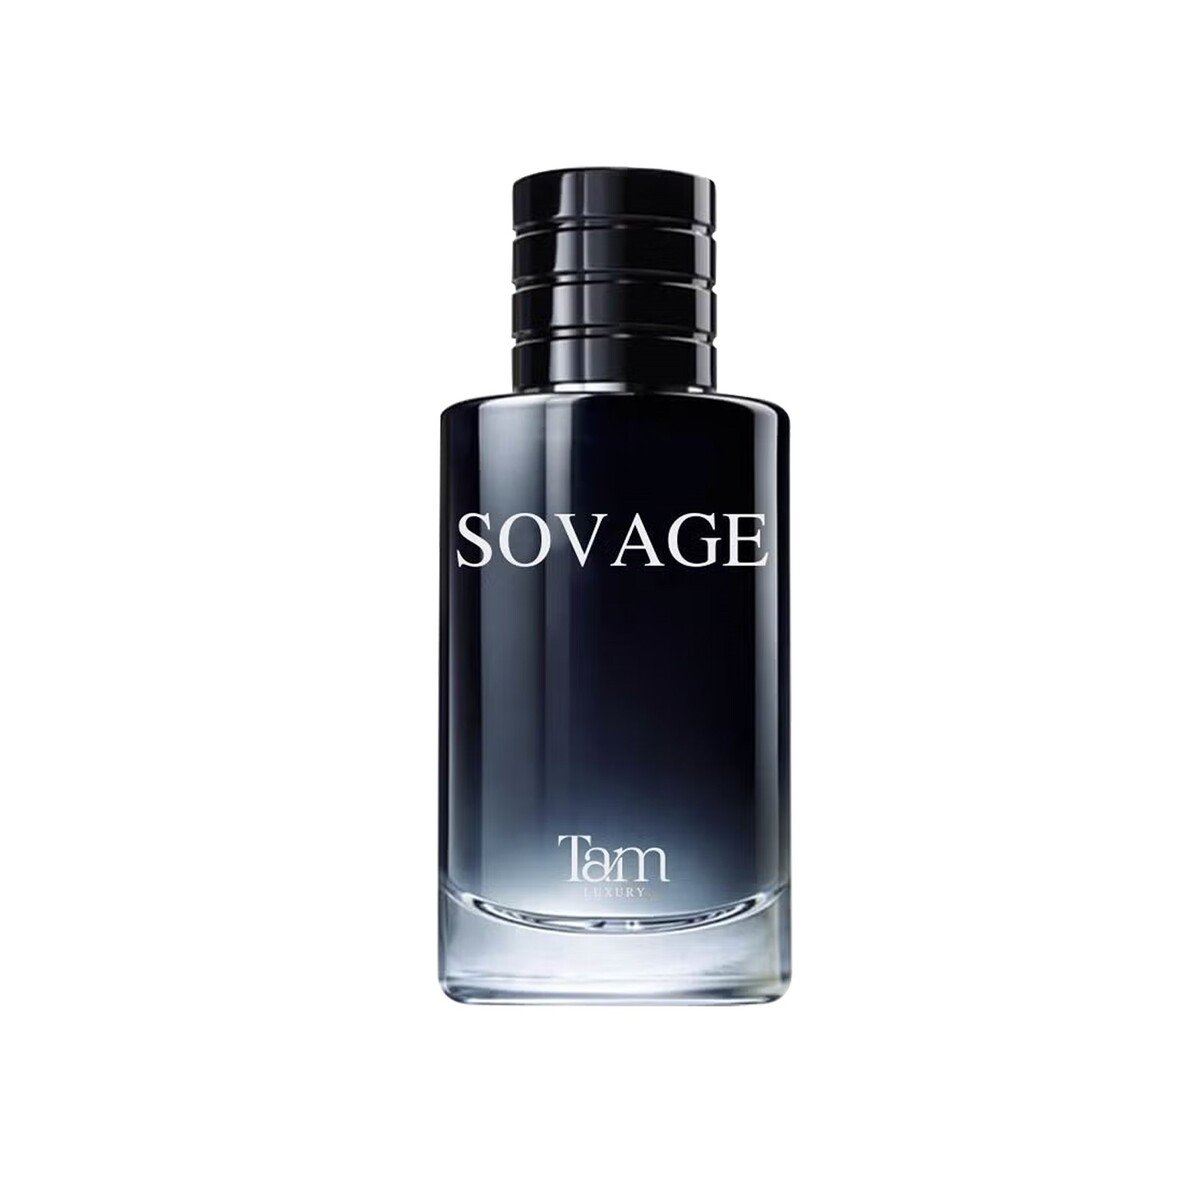 Tam EDP Sovage Perfume 100 ml